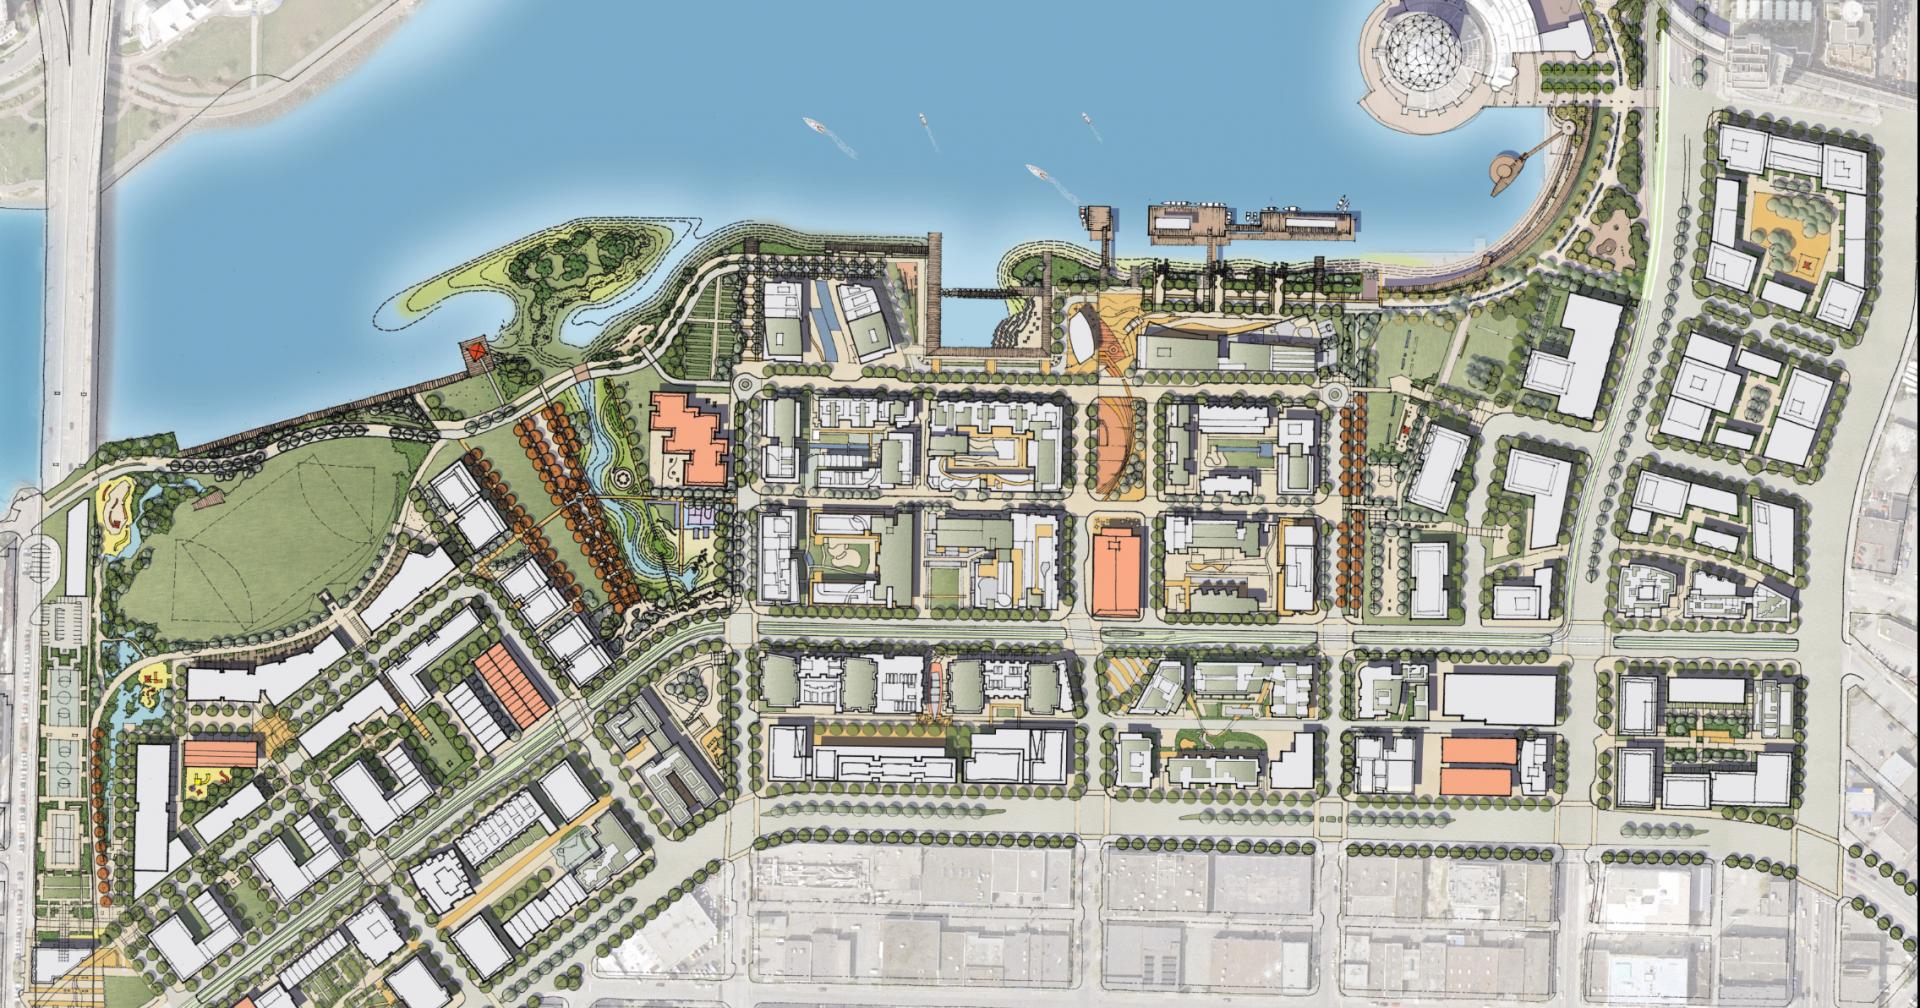 South East False Creek Neighbourhood Master Plan